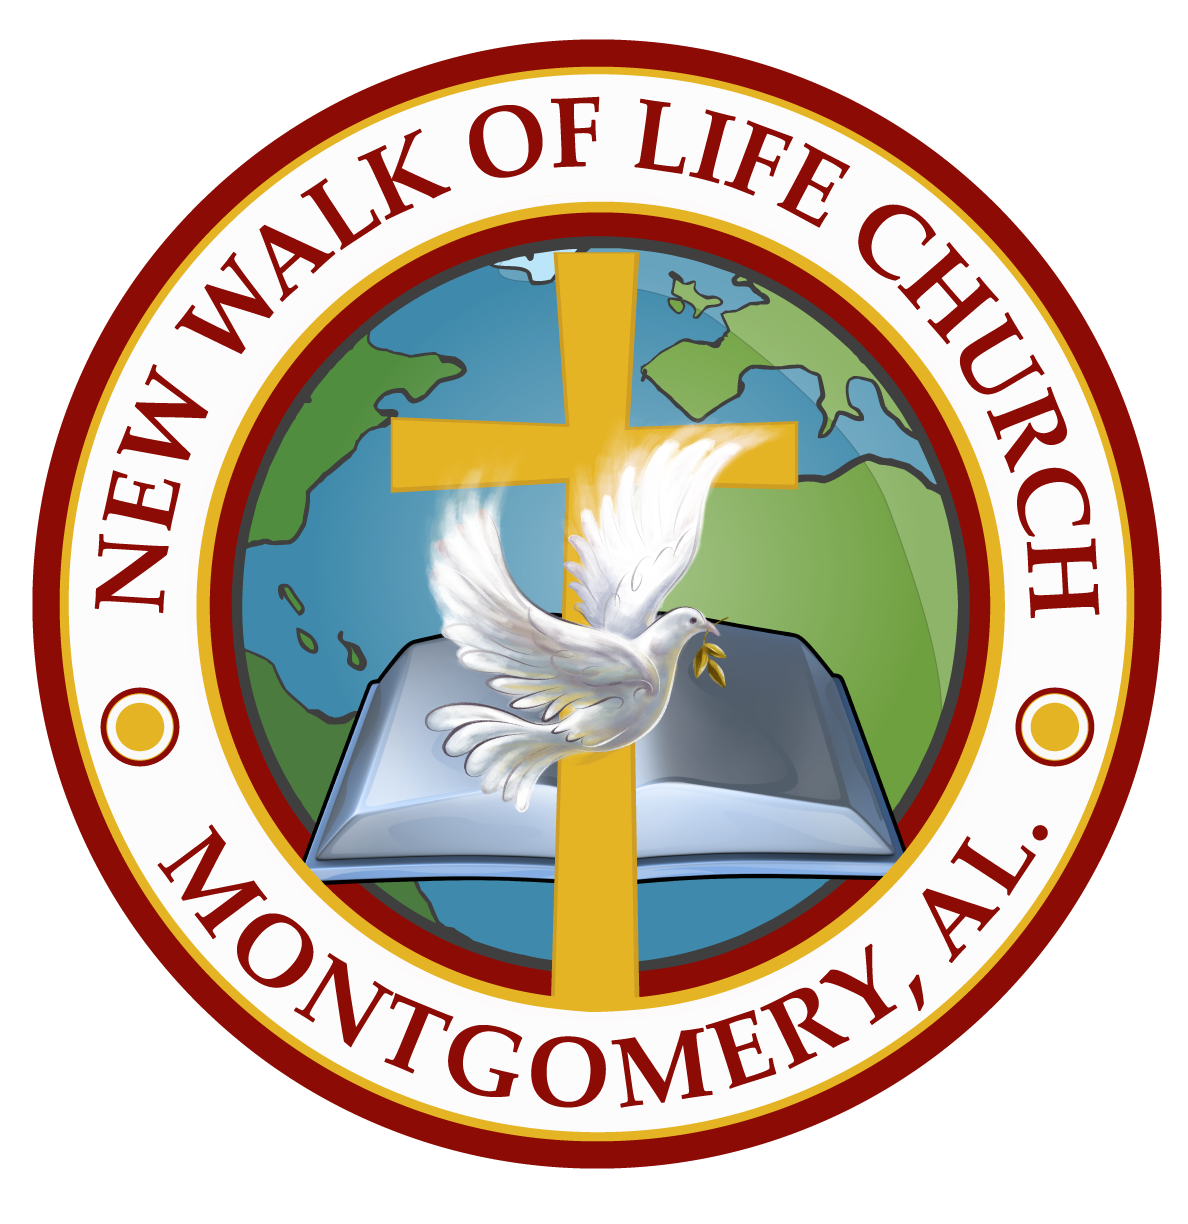 New Walk of Life Church